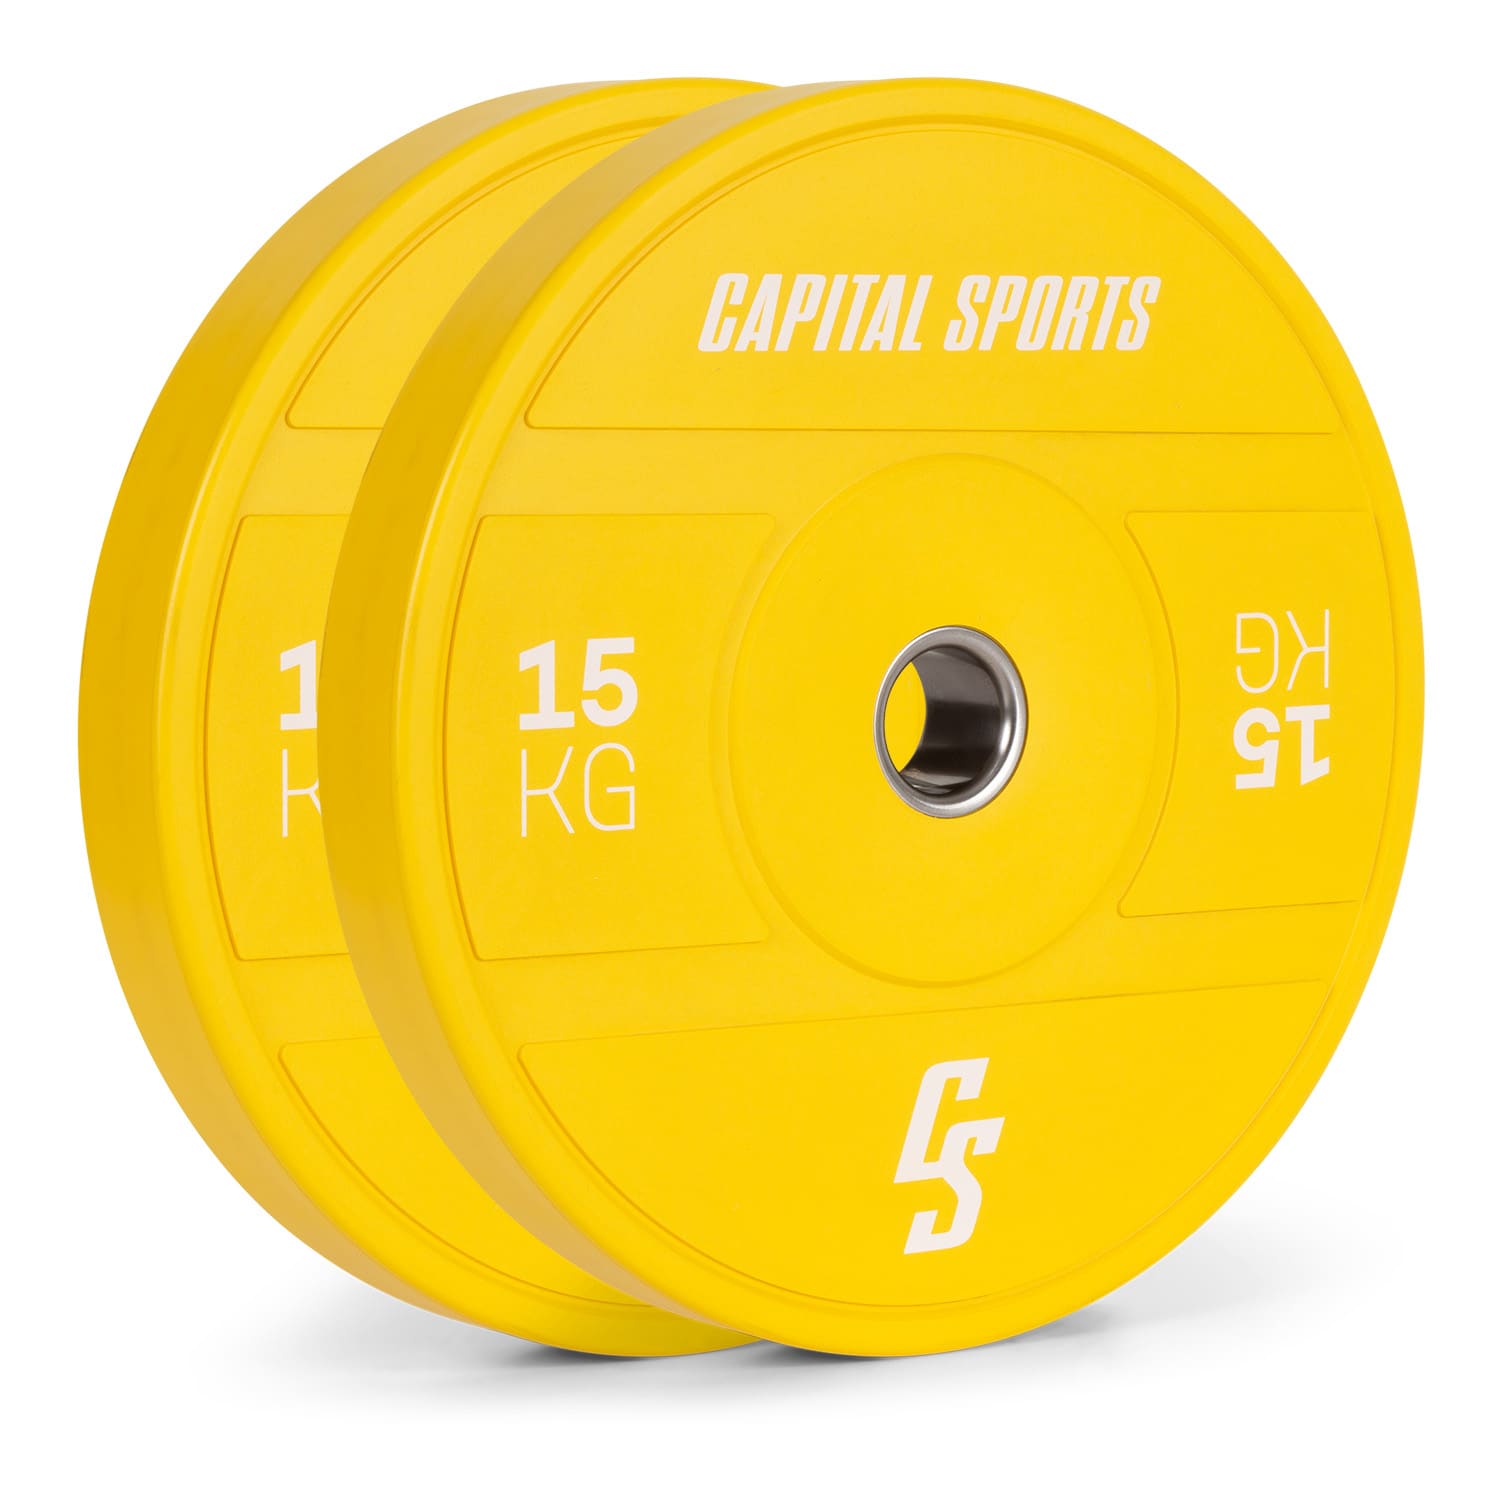 Capital sports nipton 2021, tárcsasúlyok, bumper plate, 2 x 15 kg, o 54 mm, edzett gumi